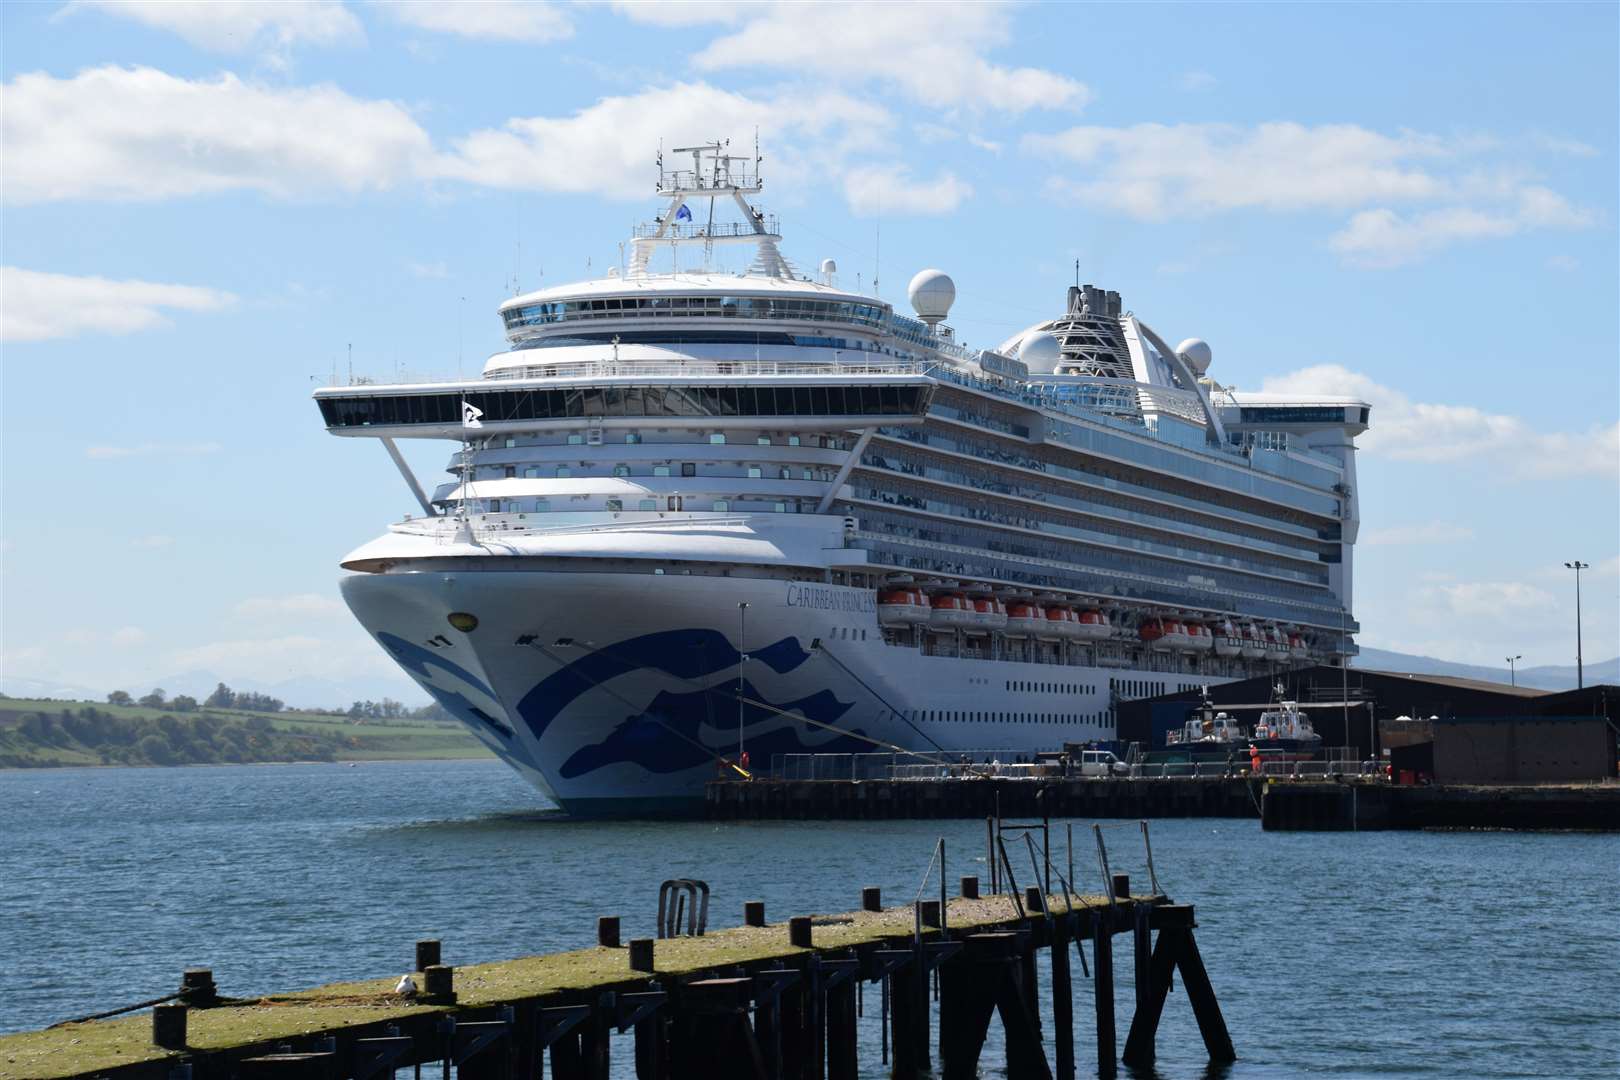 The Caribbean Princess cruise ship at dock in Invergordon.